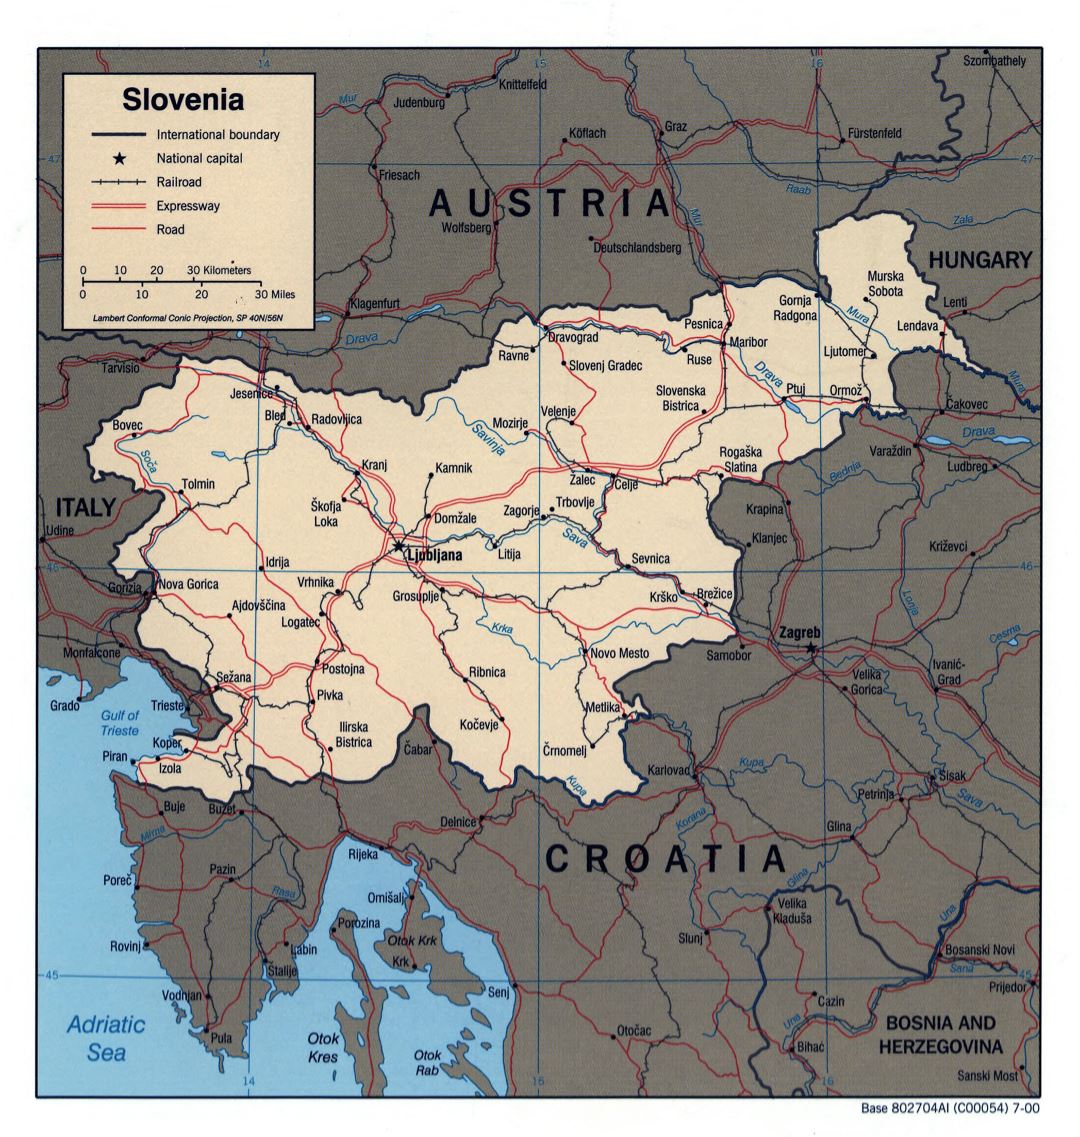 Grande detallado mapa político de Eslovenia - 2000